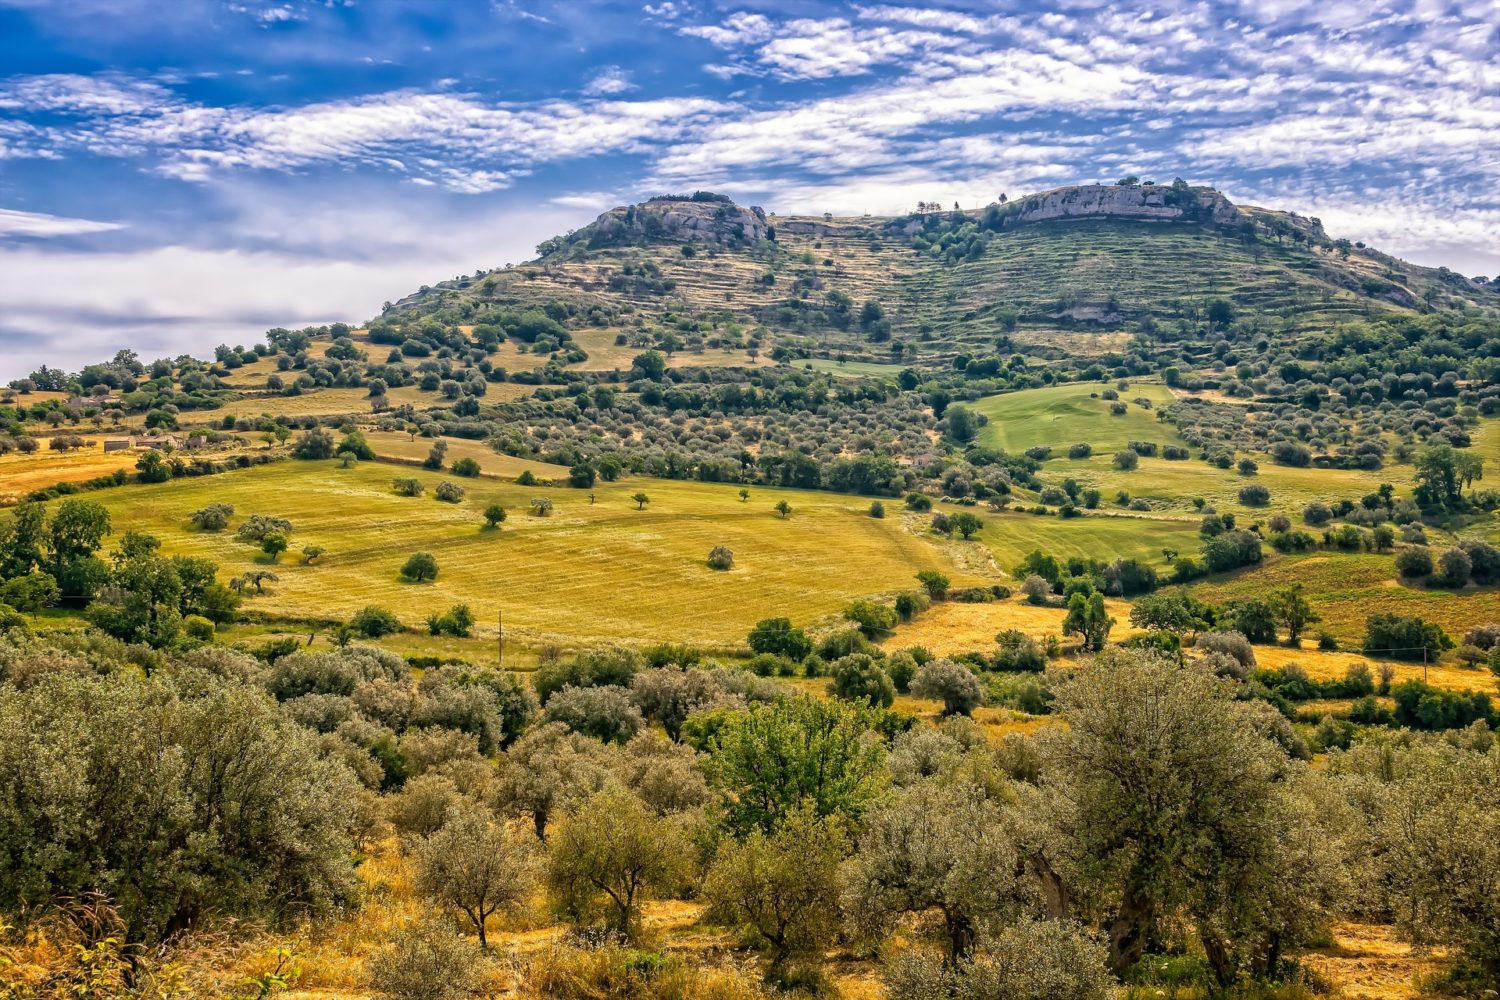 Sicily landscape is beautiful!